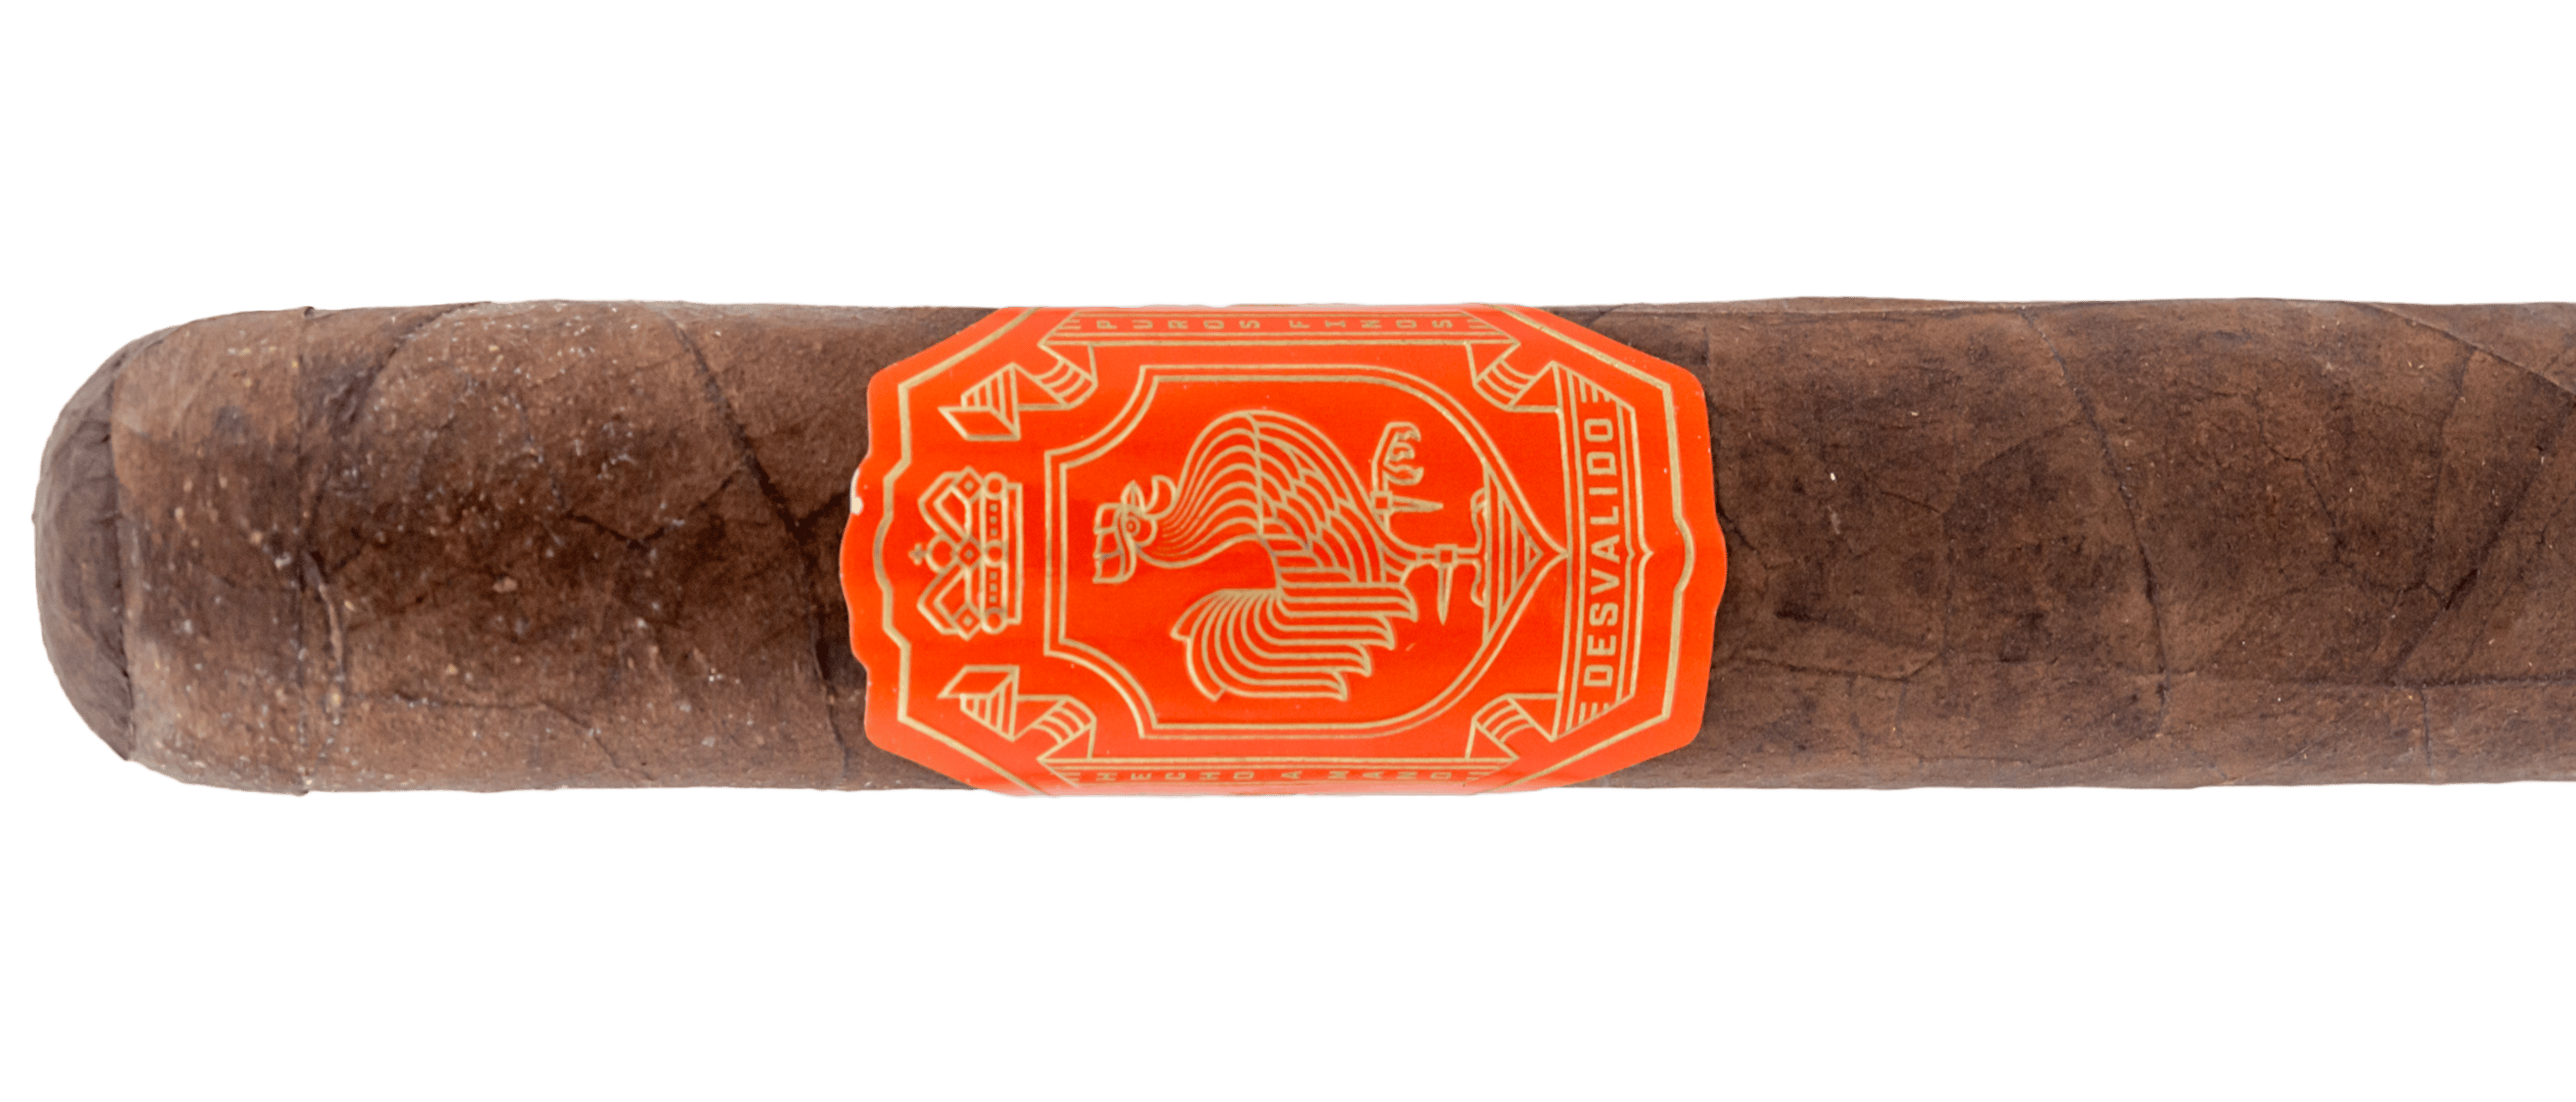 Desvalido Disla Toro - Blind Cigar Review